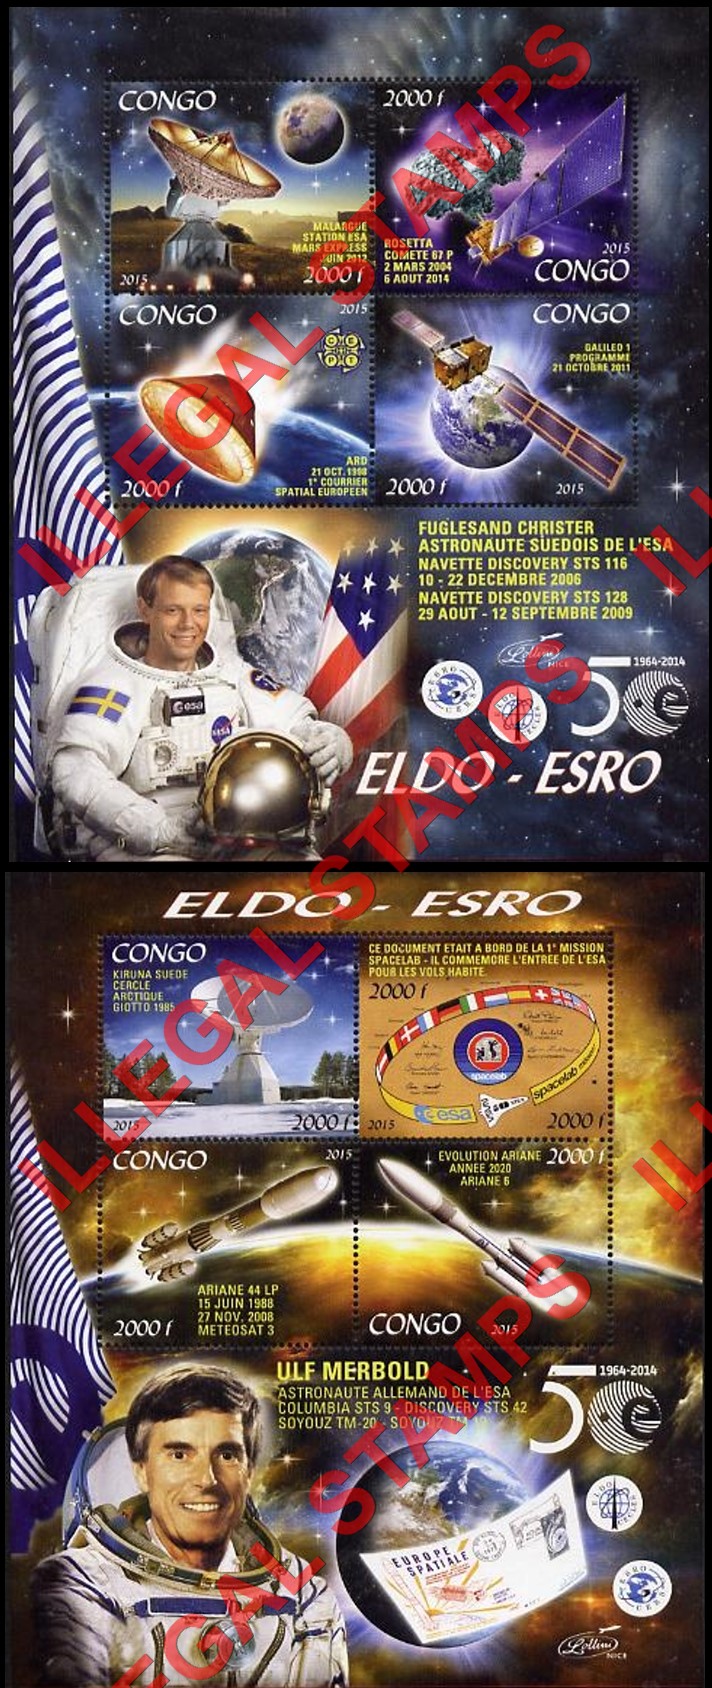 Congo Republic 2015 Space ELDO-ESRO Illegal Stamp Souvenir Sheets of 4 (Part 3)